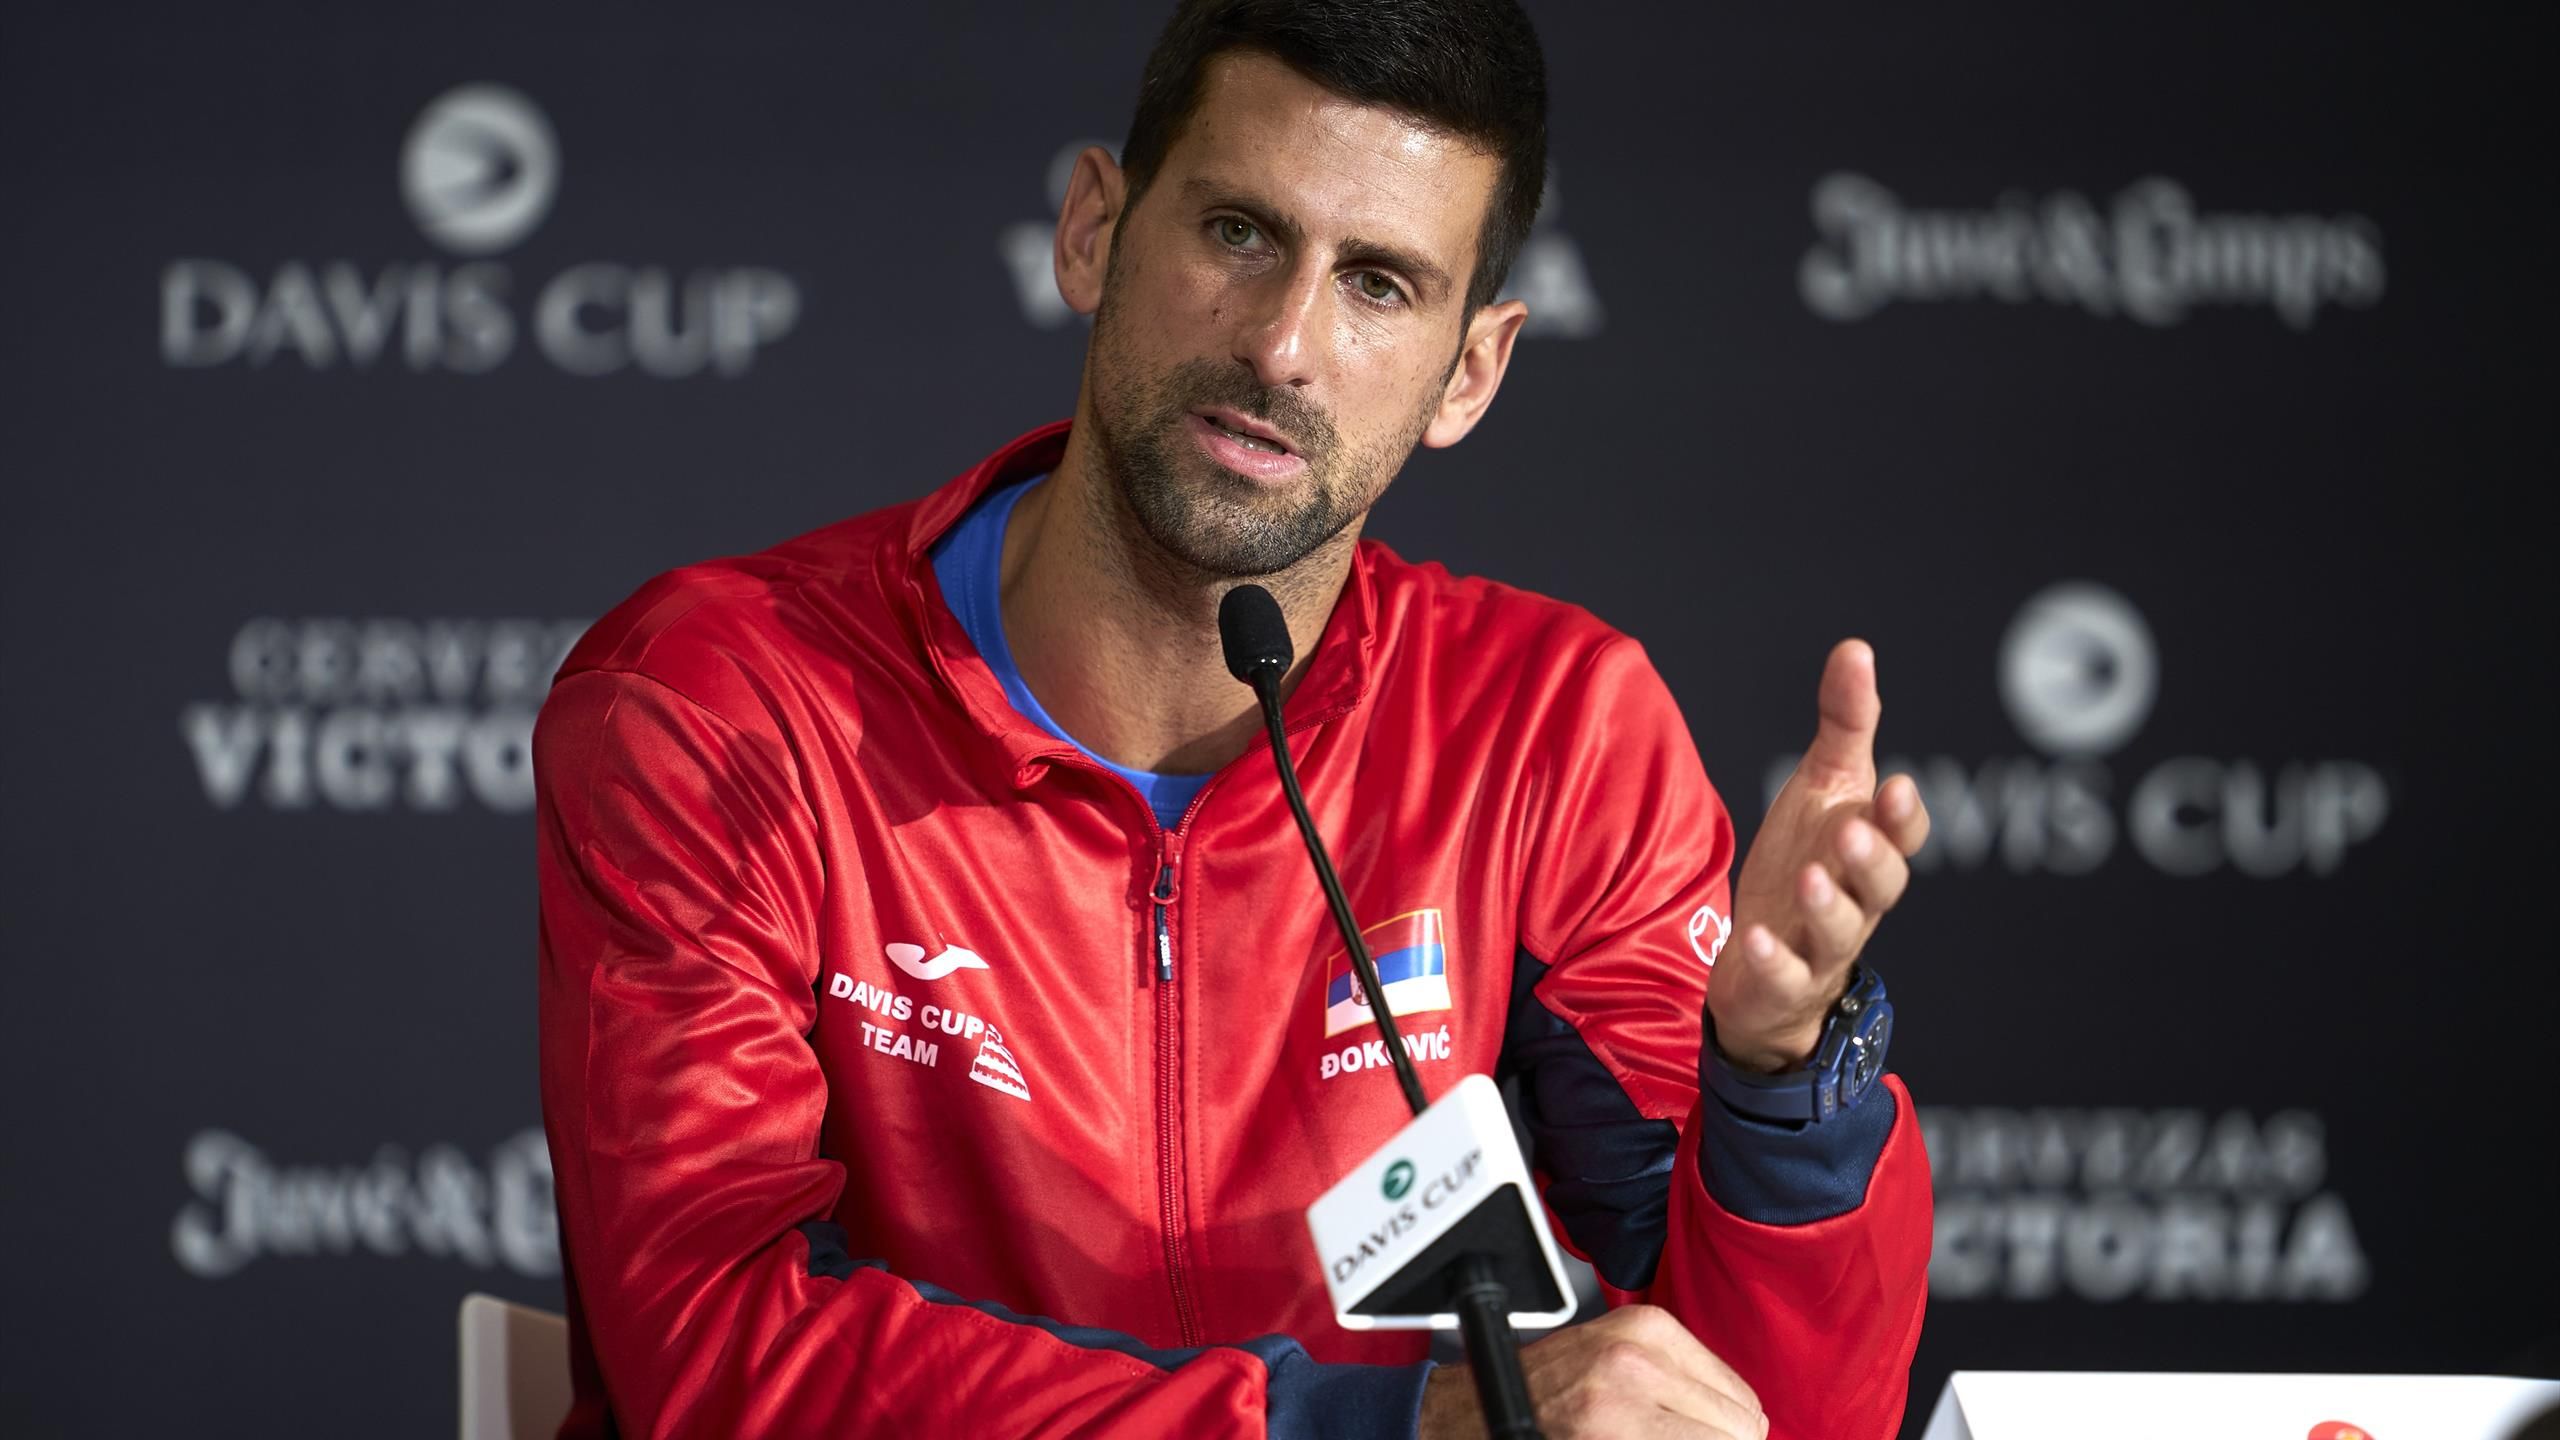 Speechless Boris Becker astounded by Novak Djokovic longevity after 24th Grand Slam - He has nothing to prove